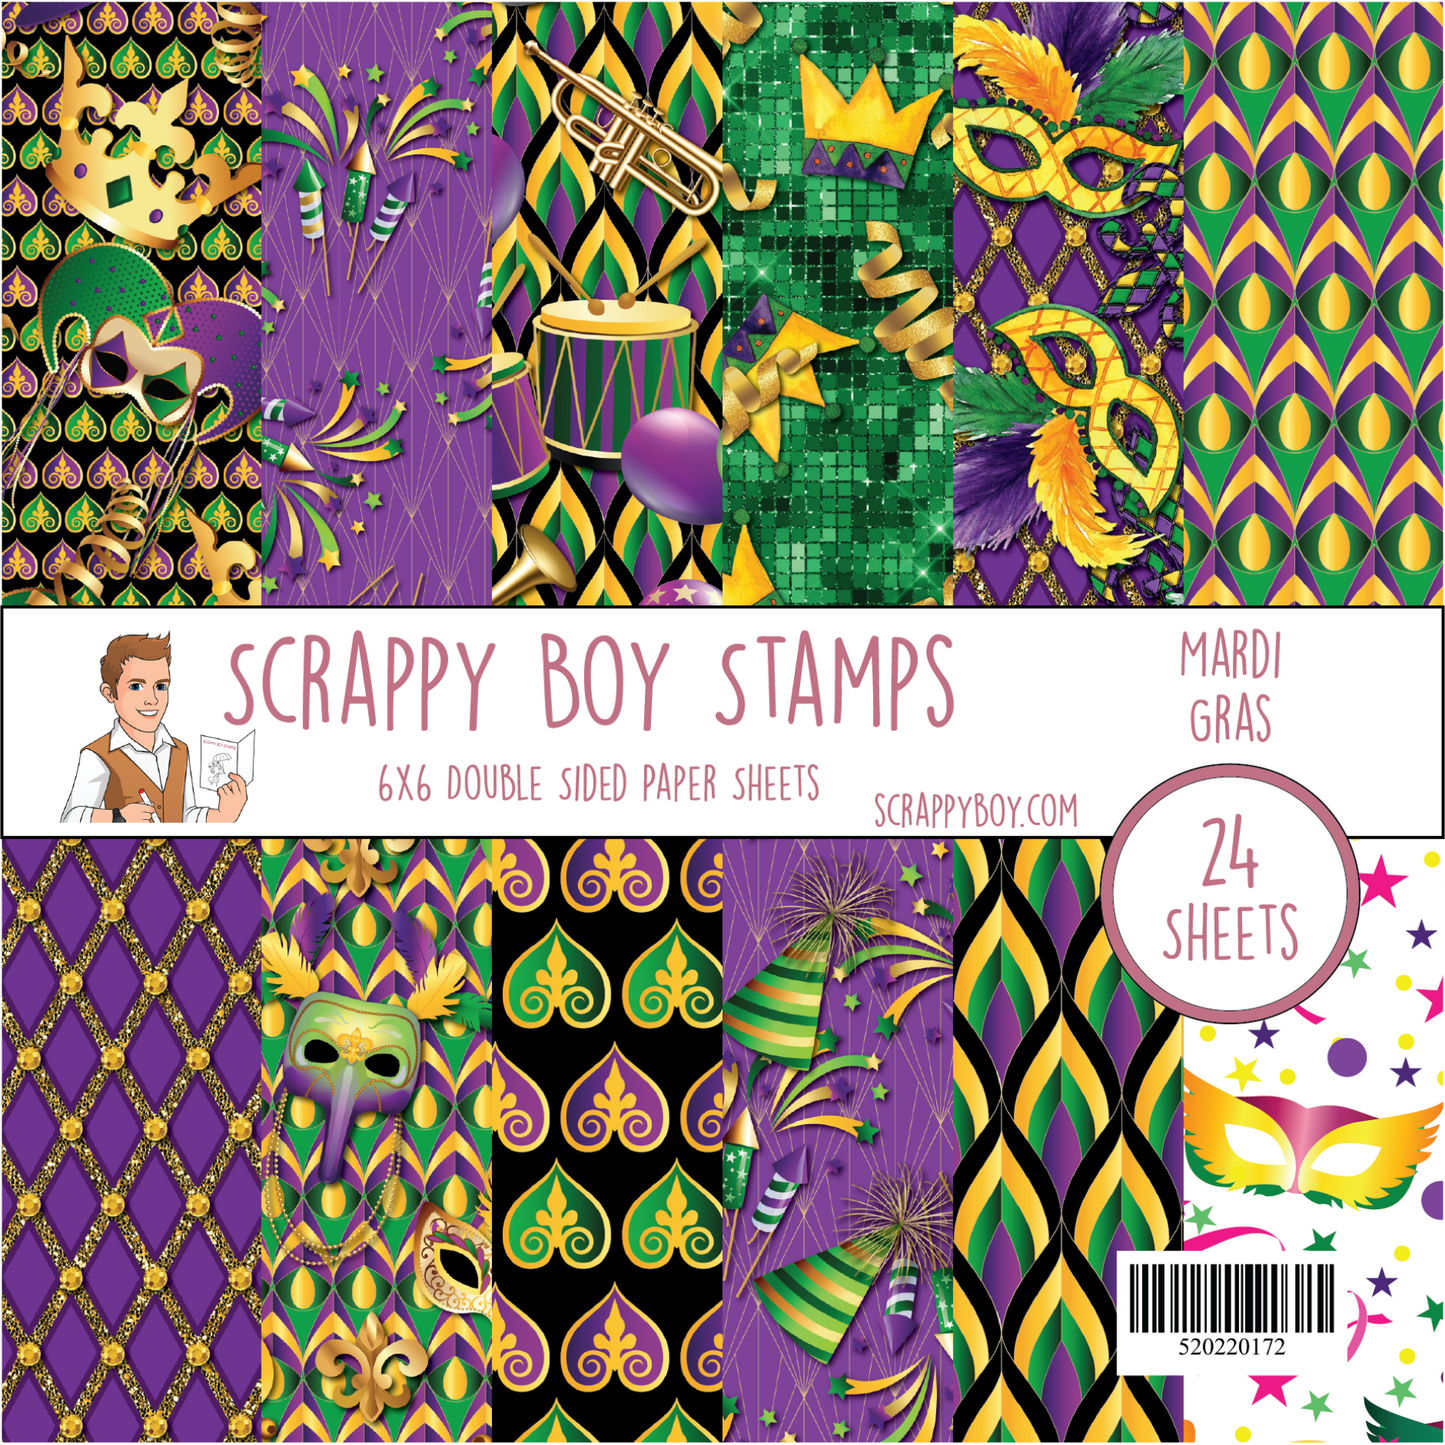 
                  
                    I Want It All Bundle - Cute Girls Mardi Gras Release scrappyboystamps
                  
                